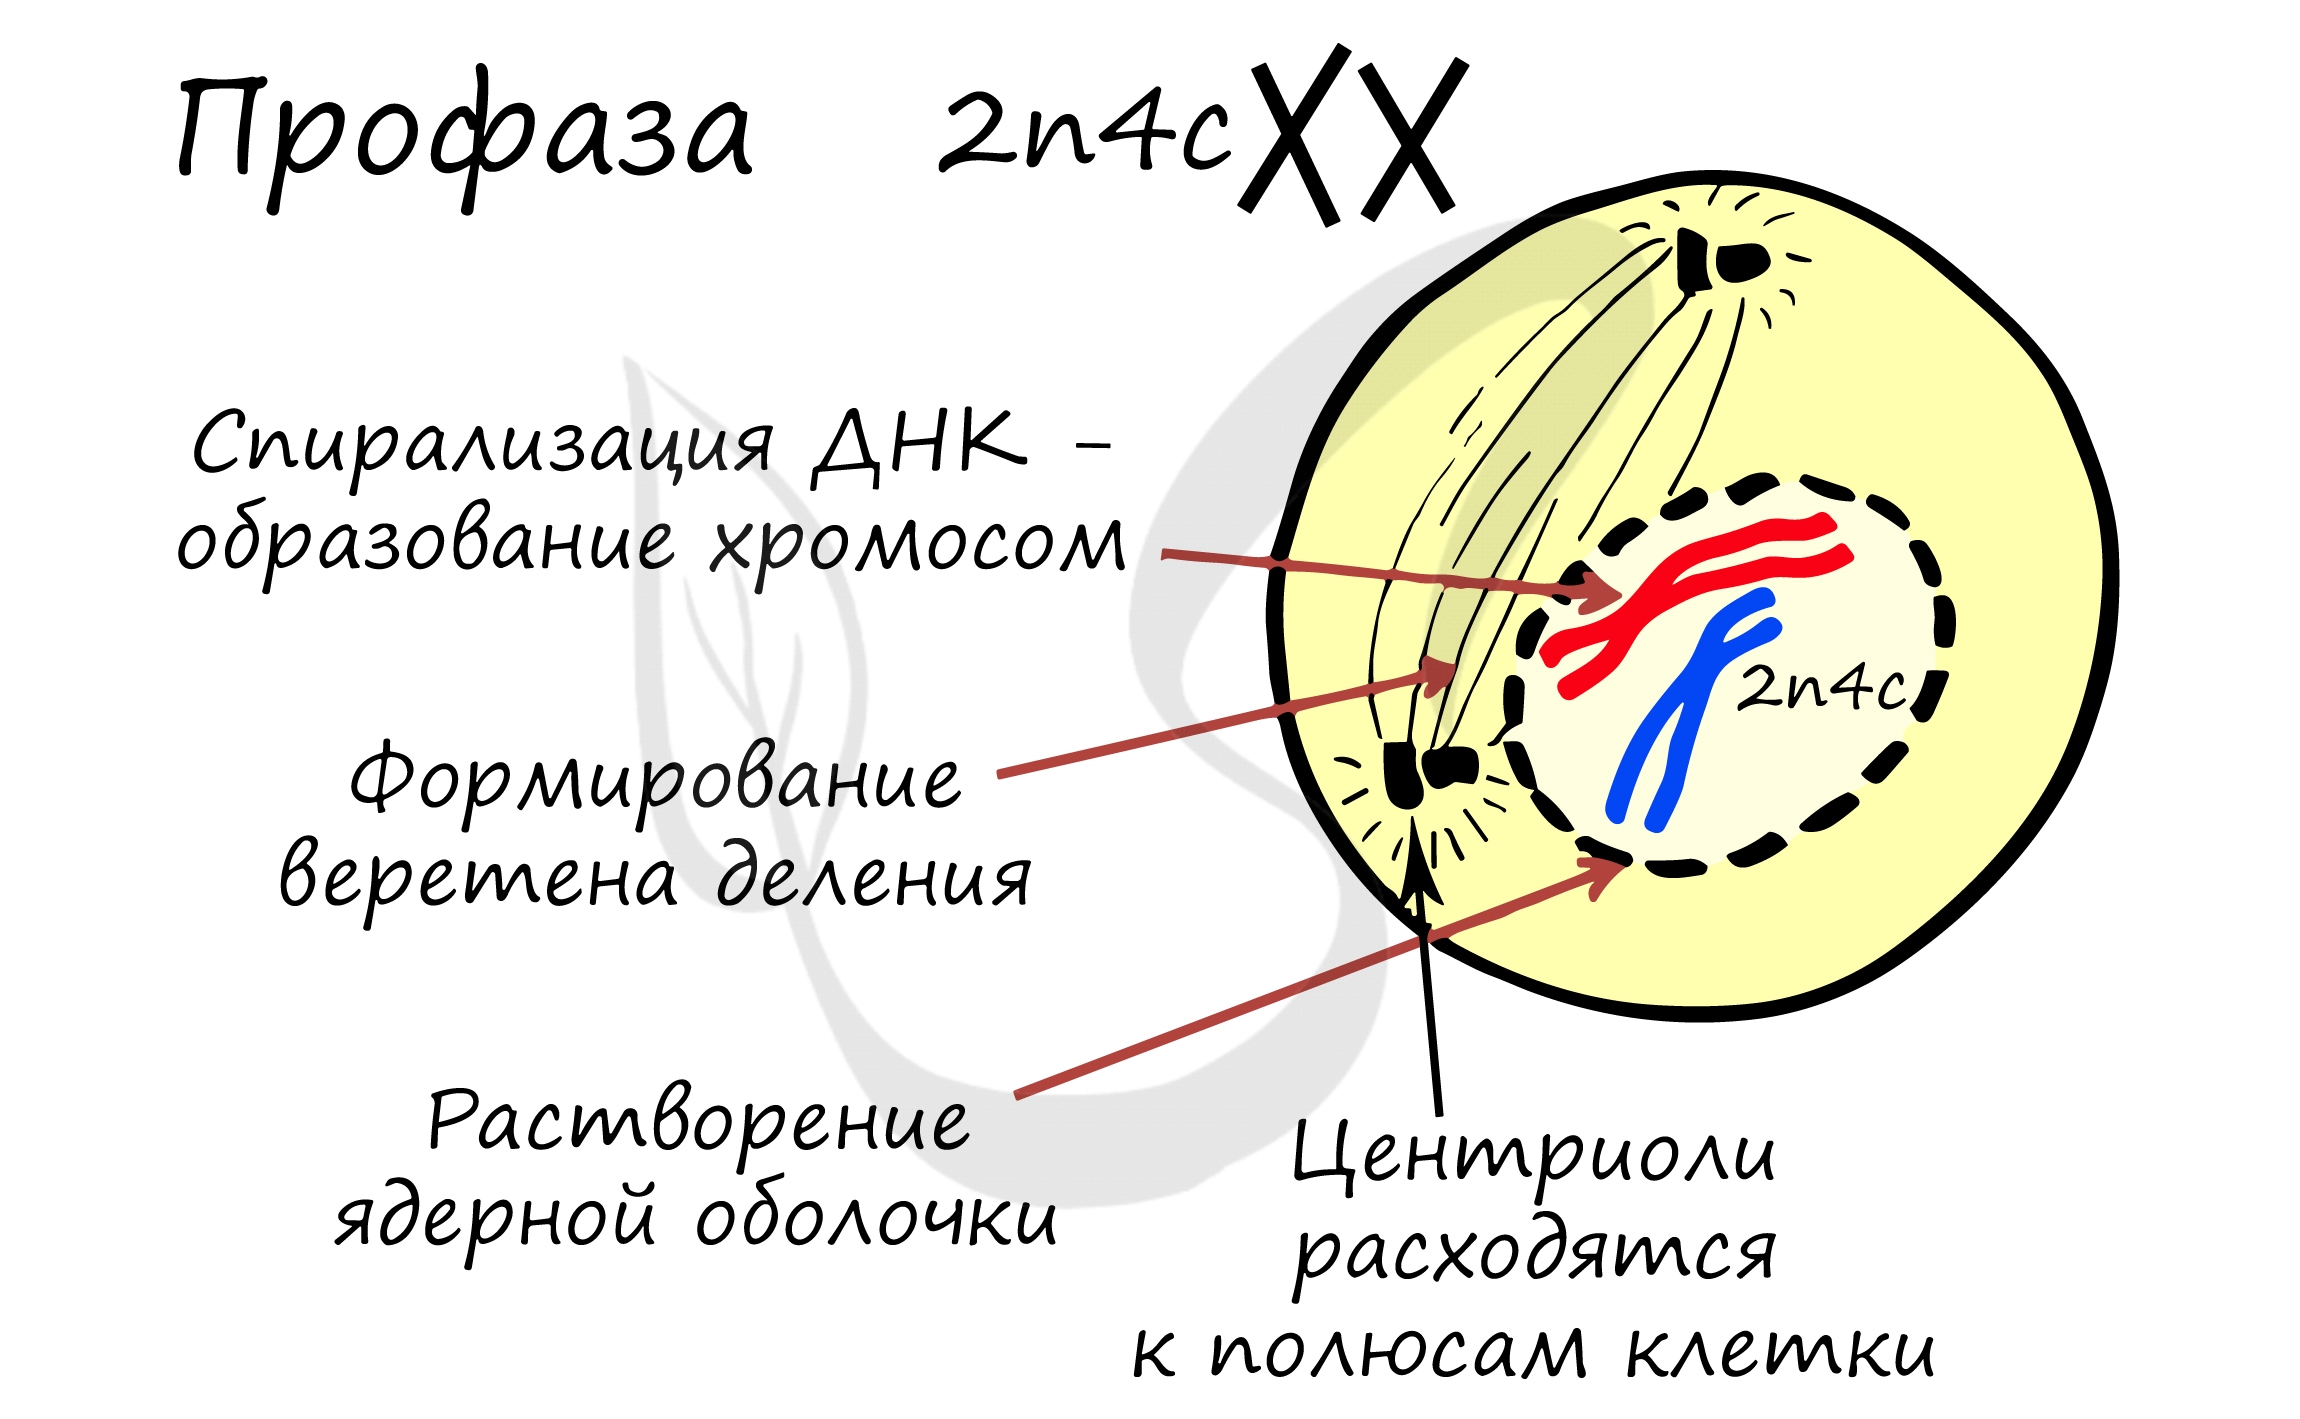 Расхождение центриолей к полюсам клетки фаза. Митоз мейоз метафаза анафаза телофаза 2n4c 4n4c n2c. Профаза ядро ядерные оболочки ядрышки. Метафаза 2 набор хромосом. Профаза митоз 2 набор хромосом.